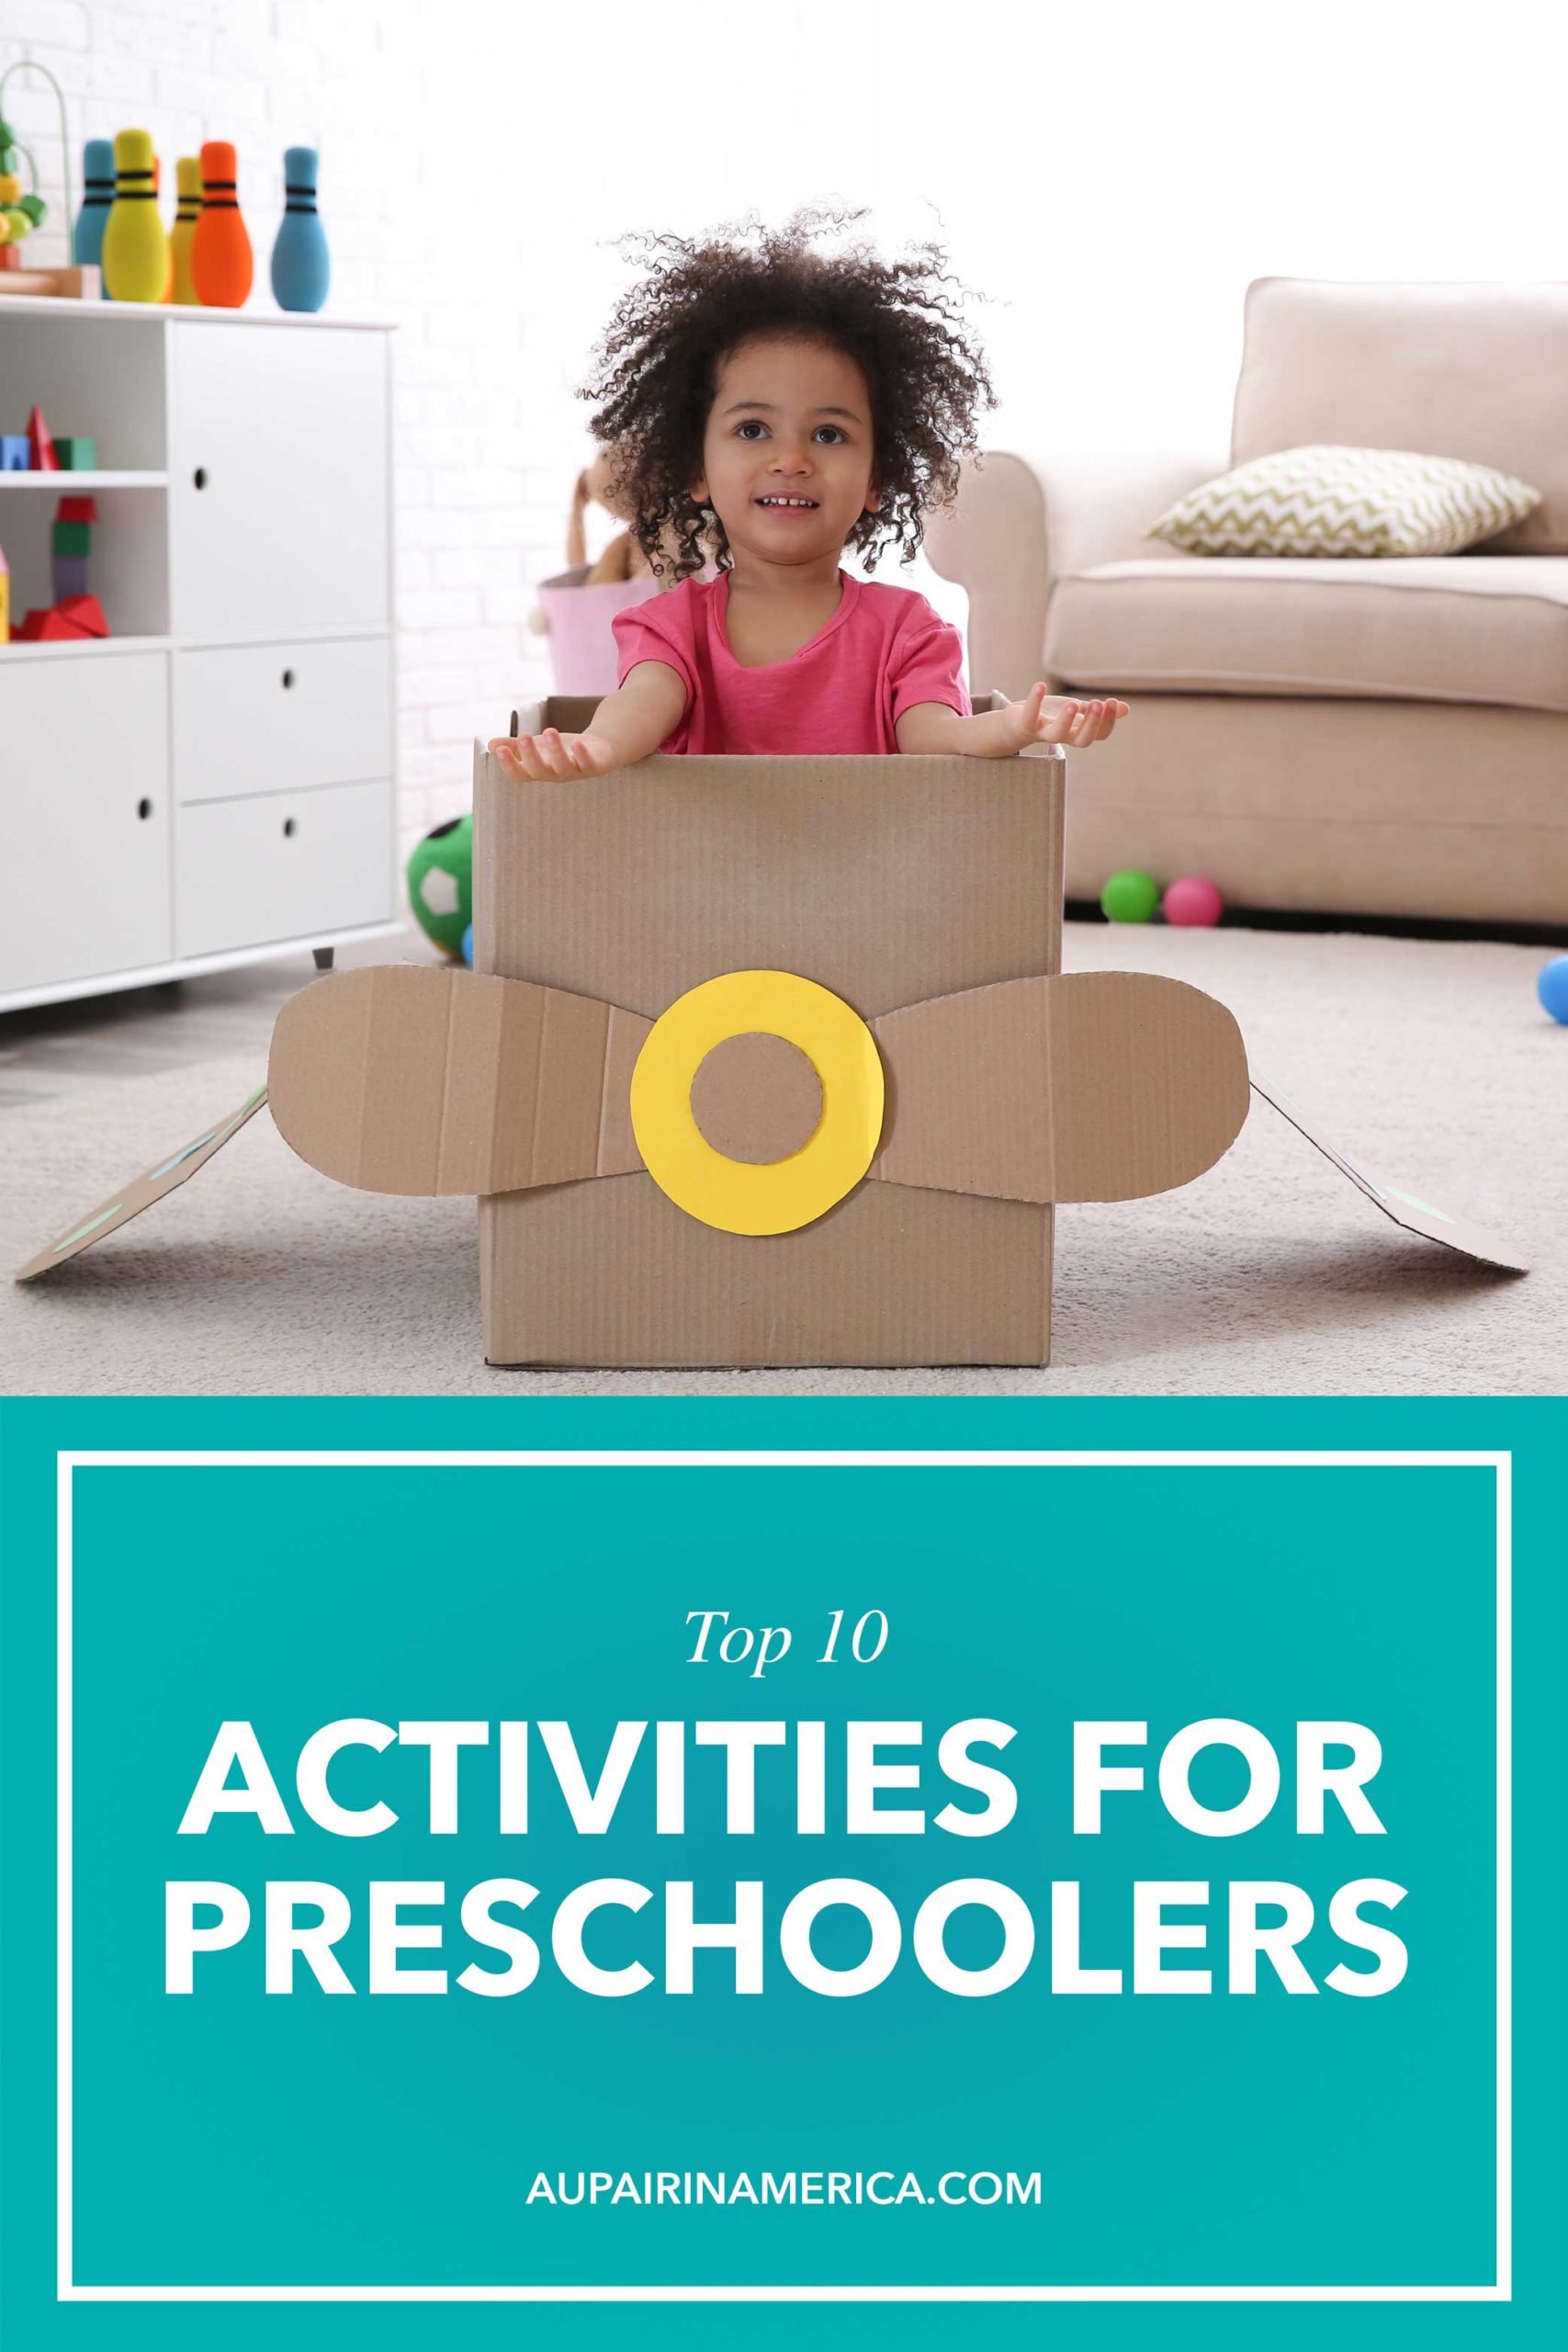 Top 10 activities for preschoolers from the experts!